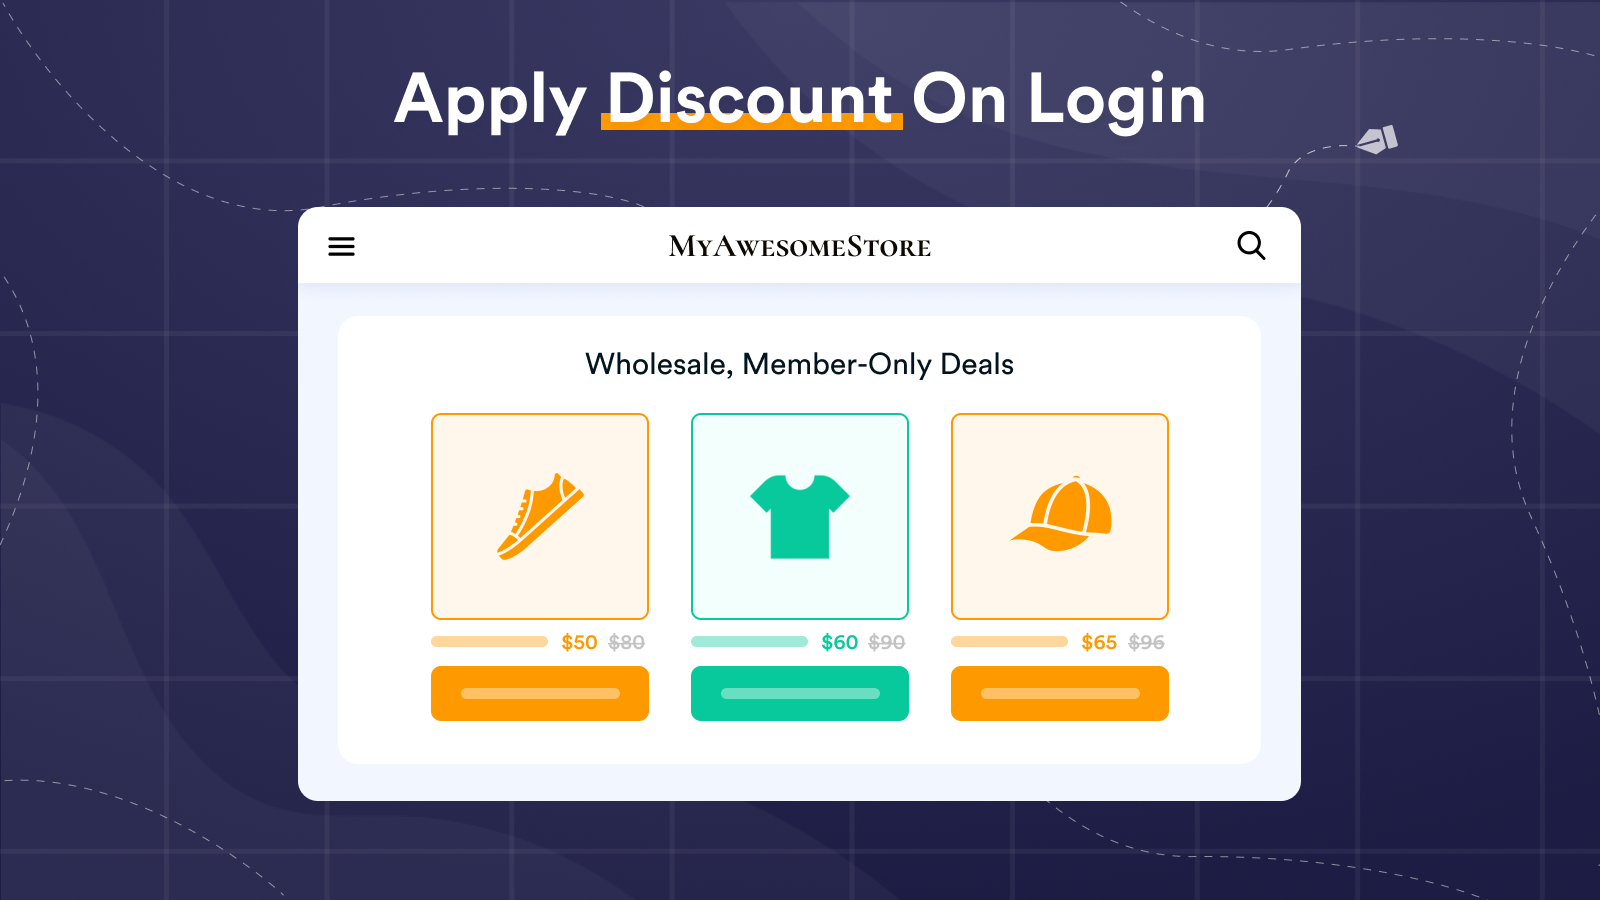 Apply discount on login